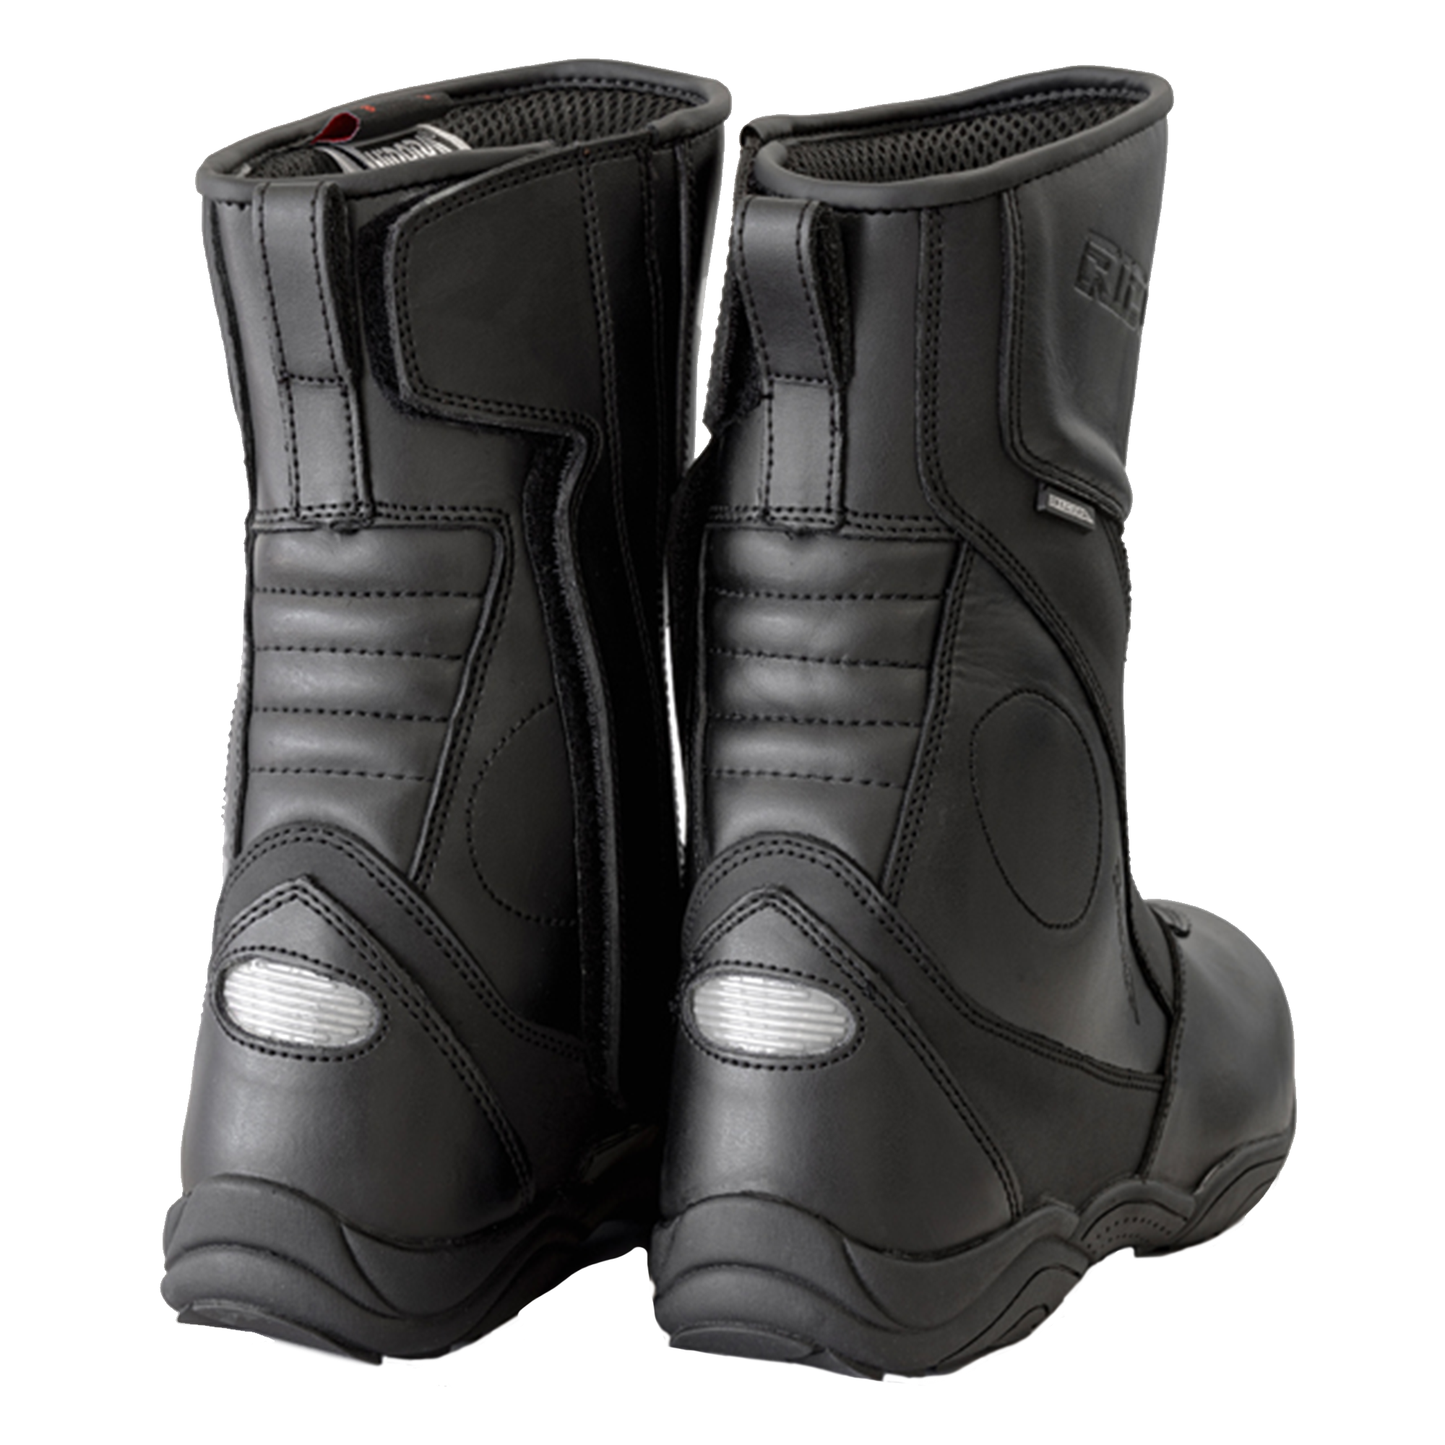 Richa Zenith Boots - Black